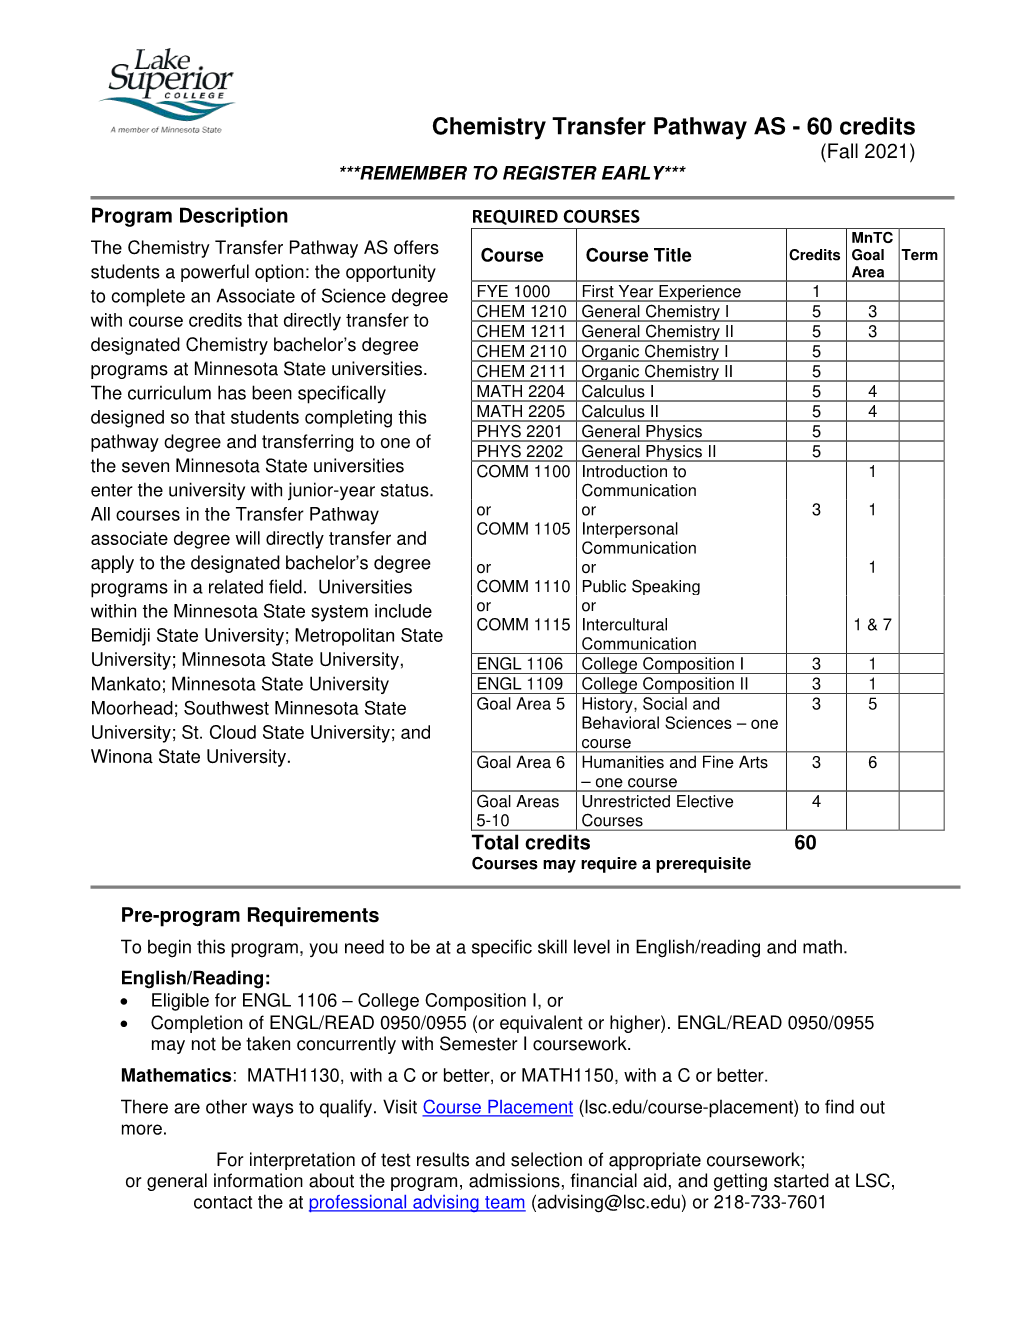 Chemistry Transfer Pathway Program Guide